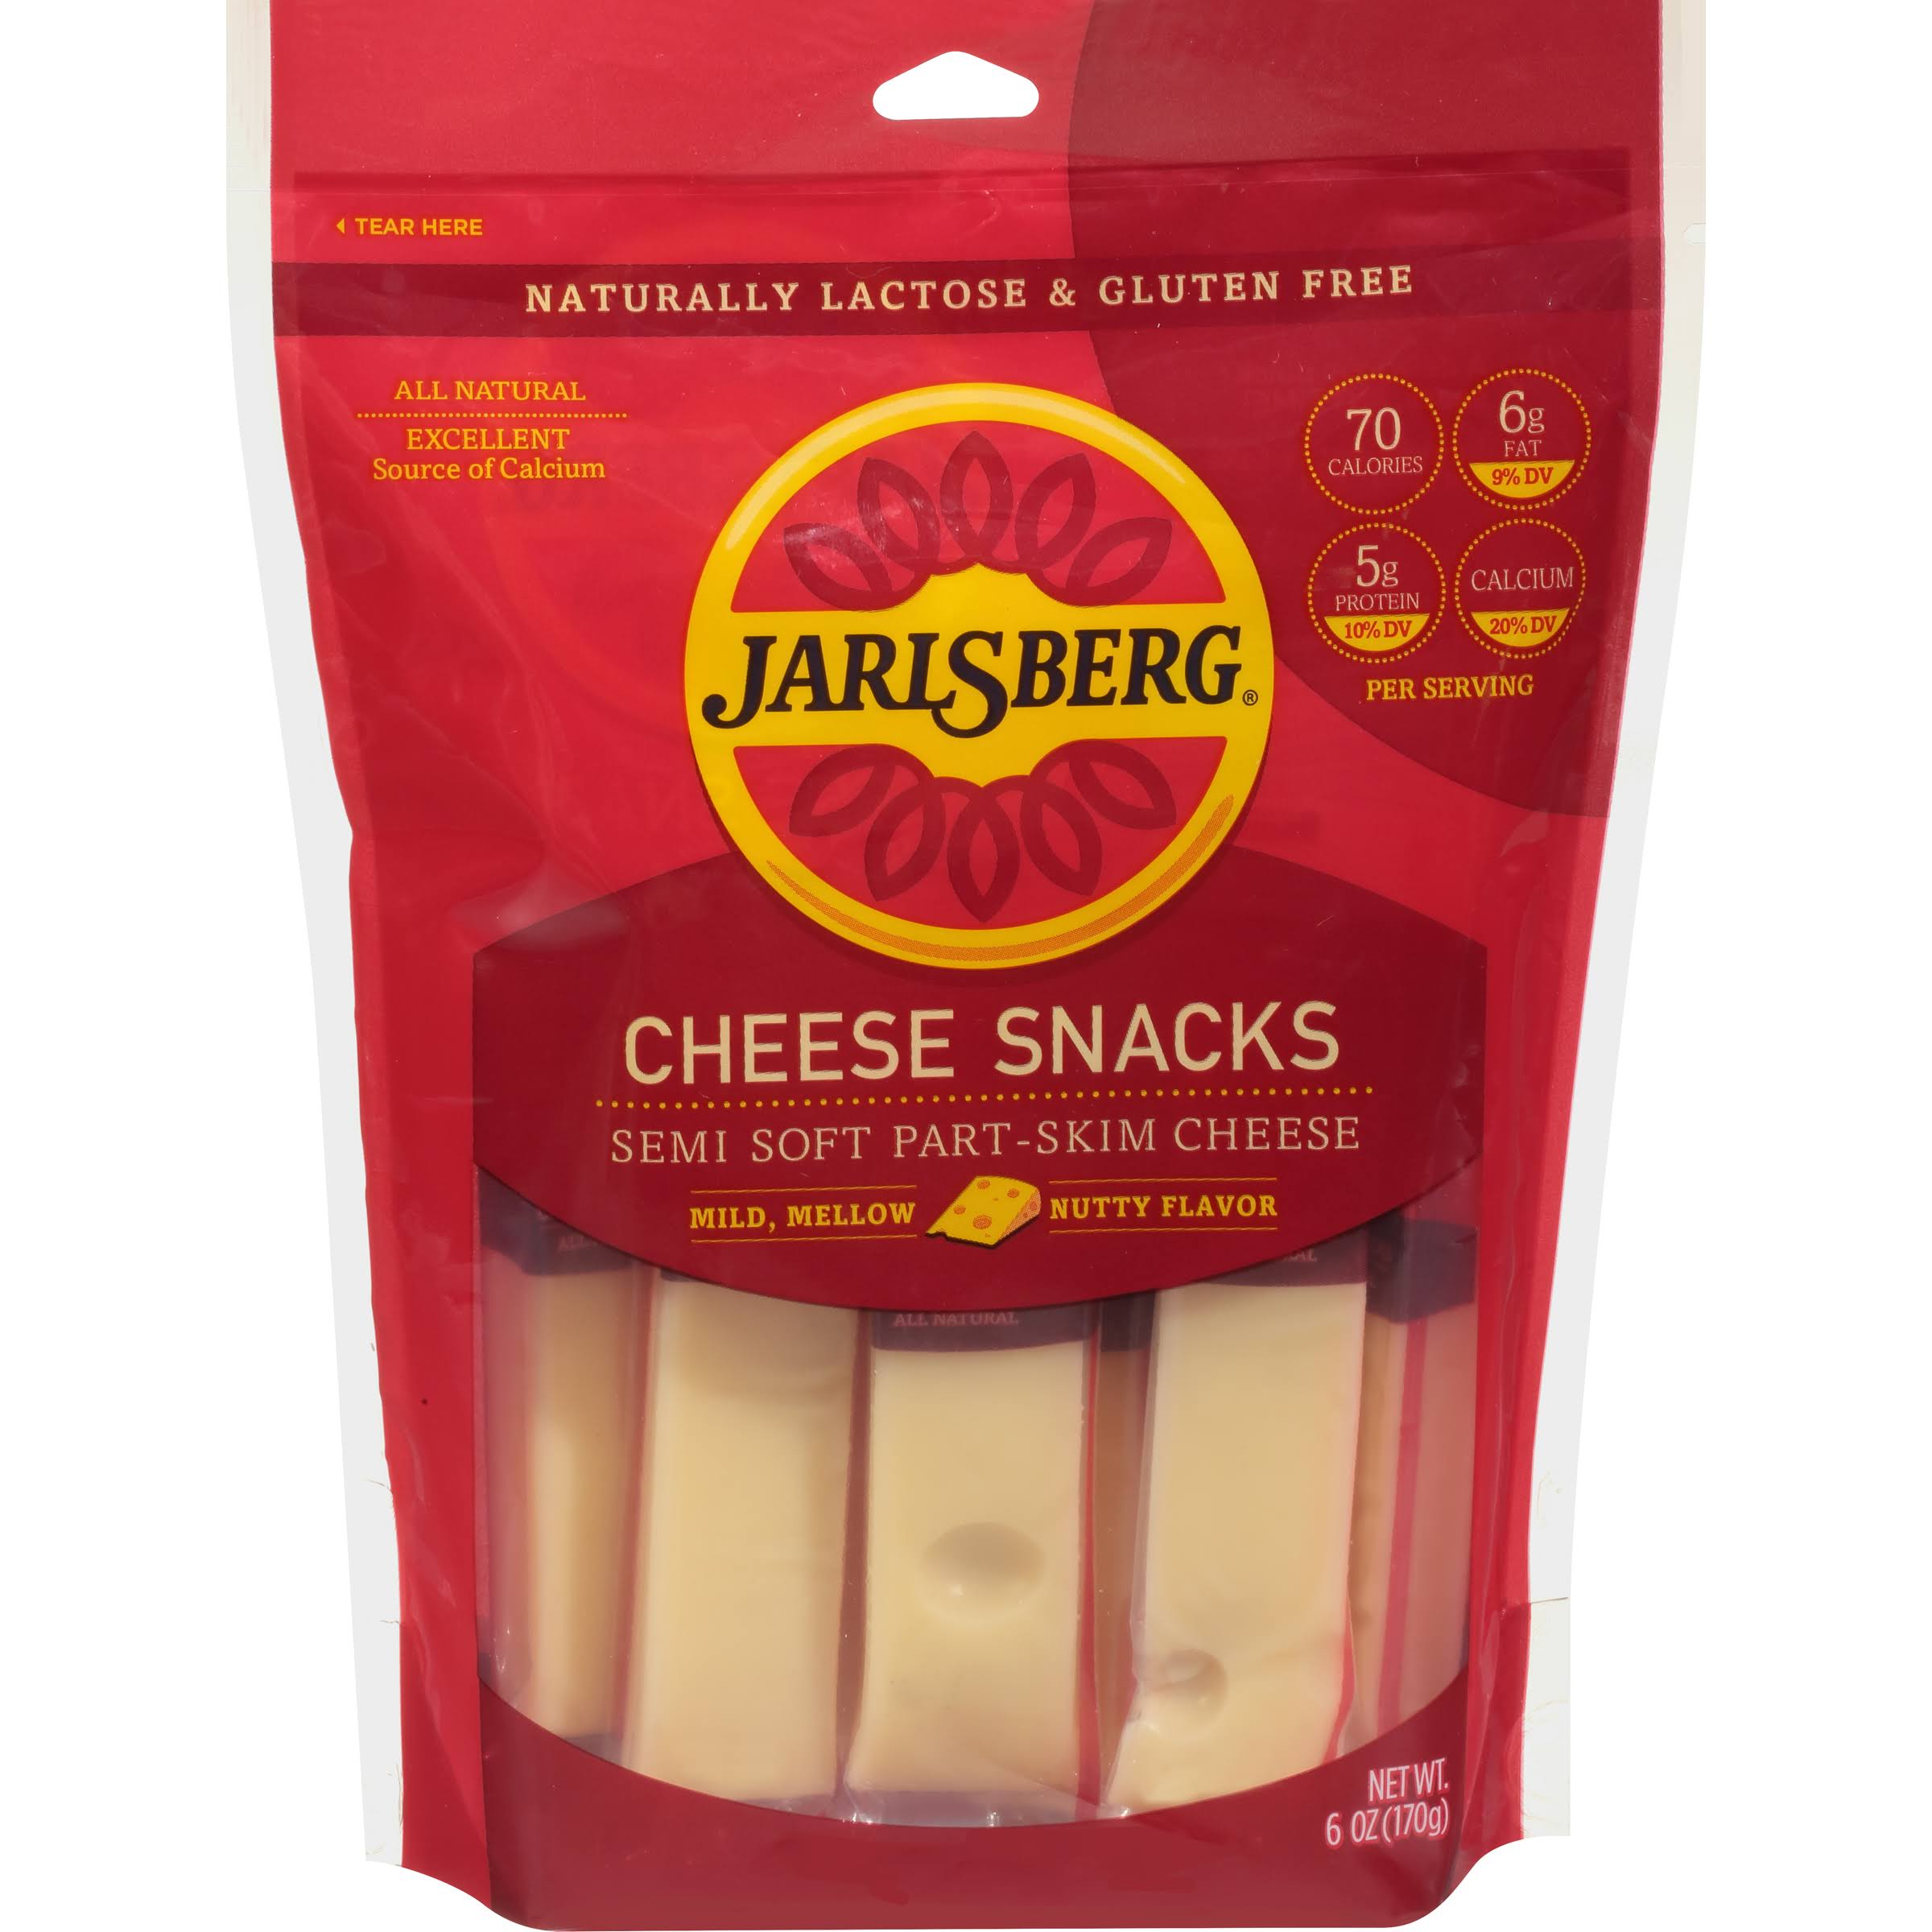 Jarlsberg Semi Soft Part-Skim Cheese Snacks - 6 oz